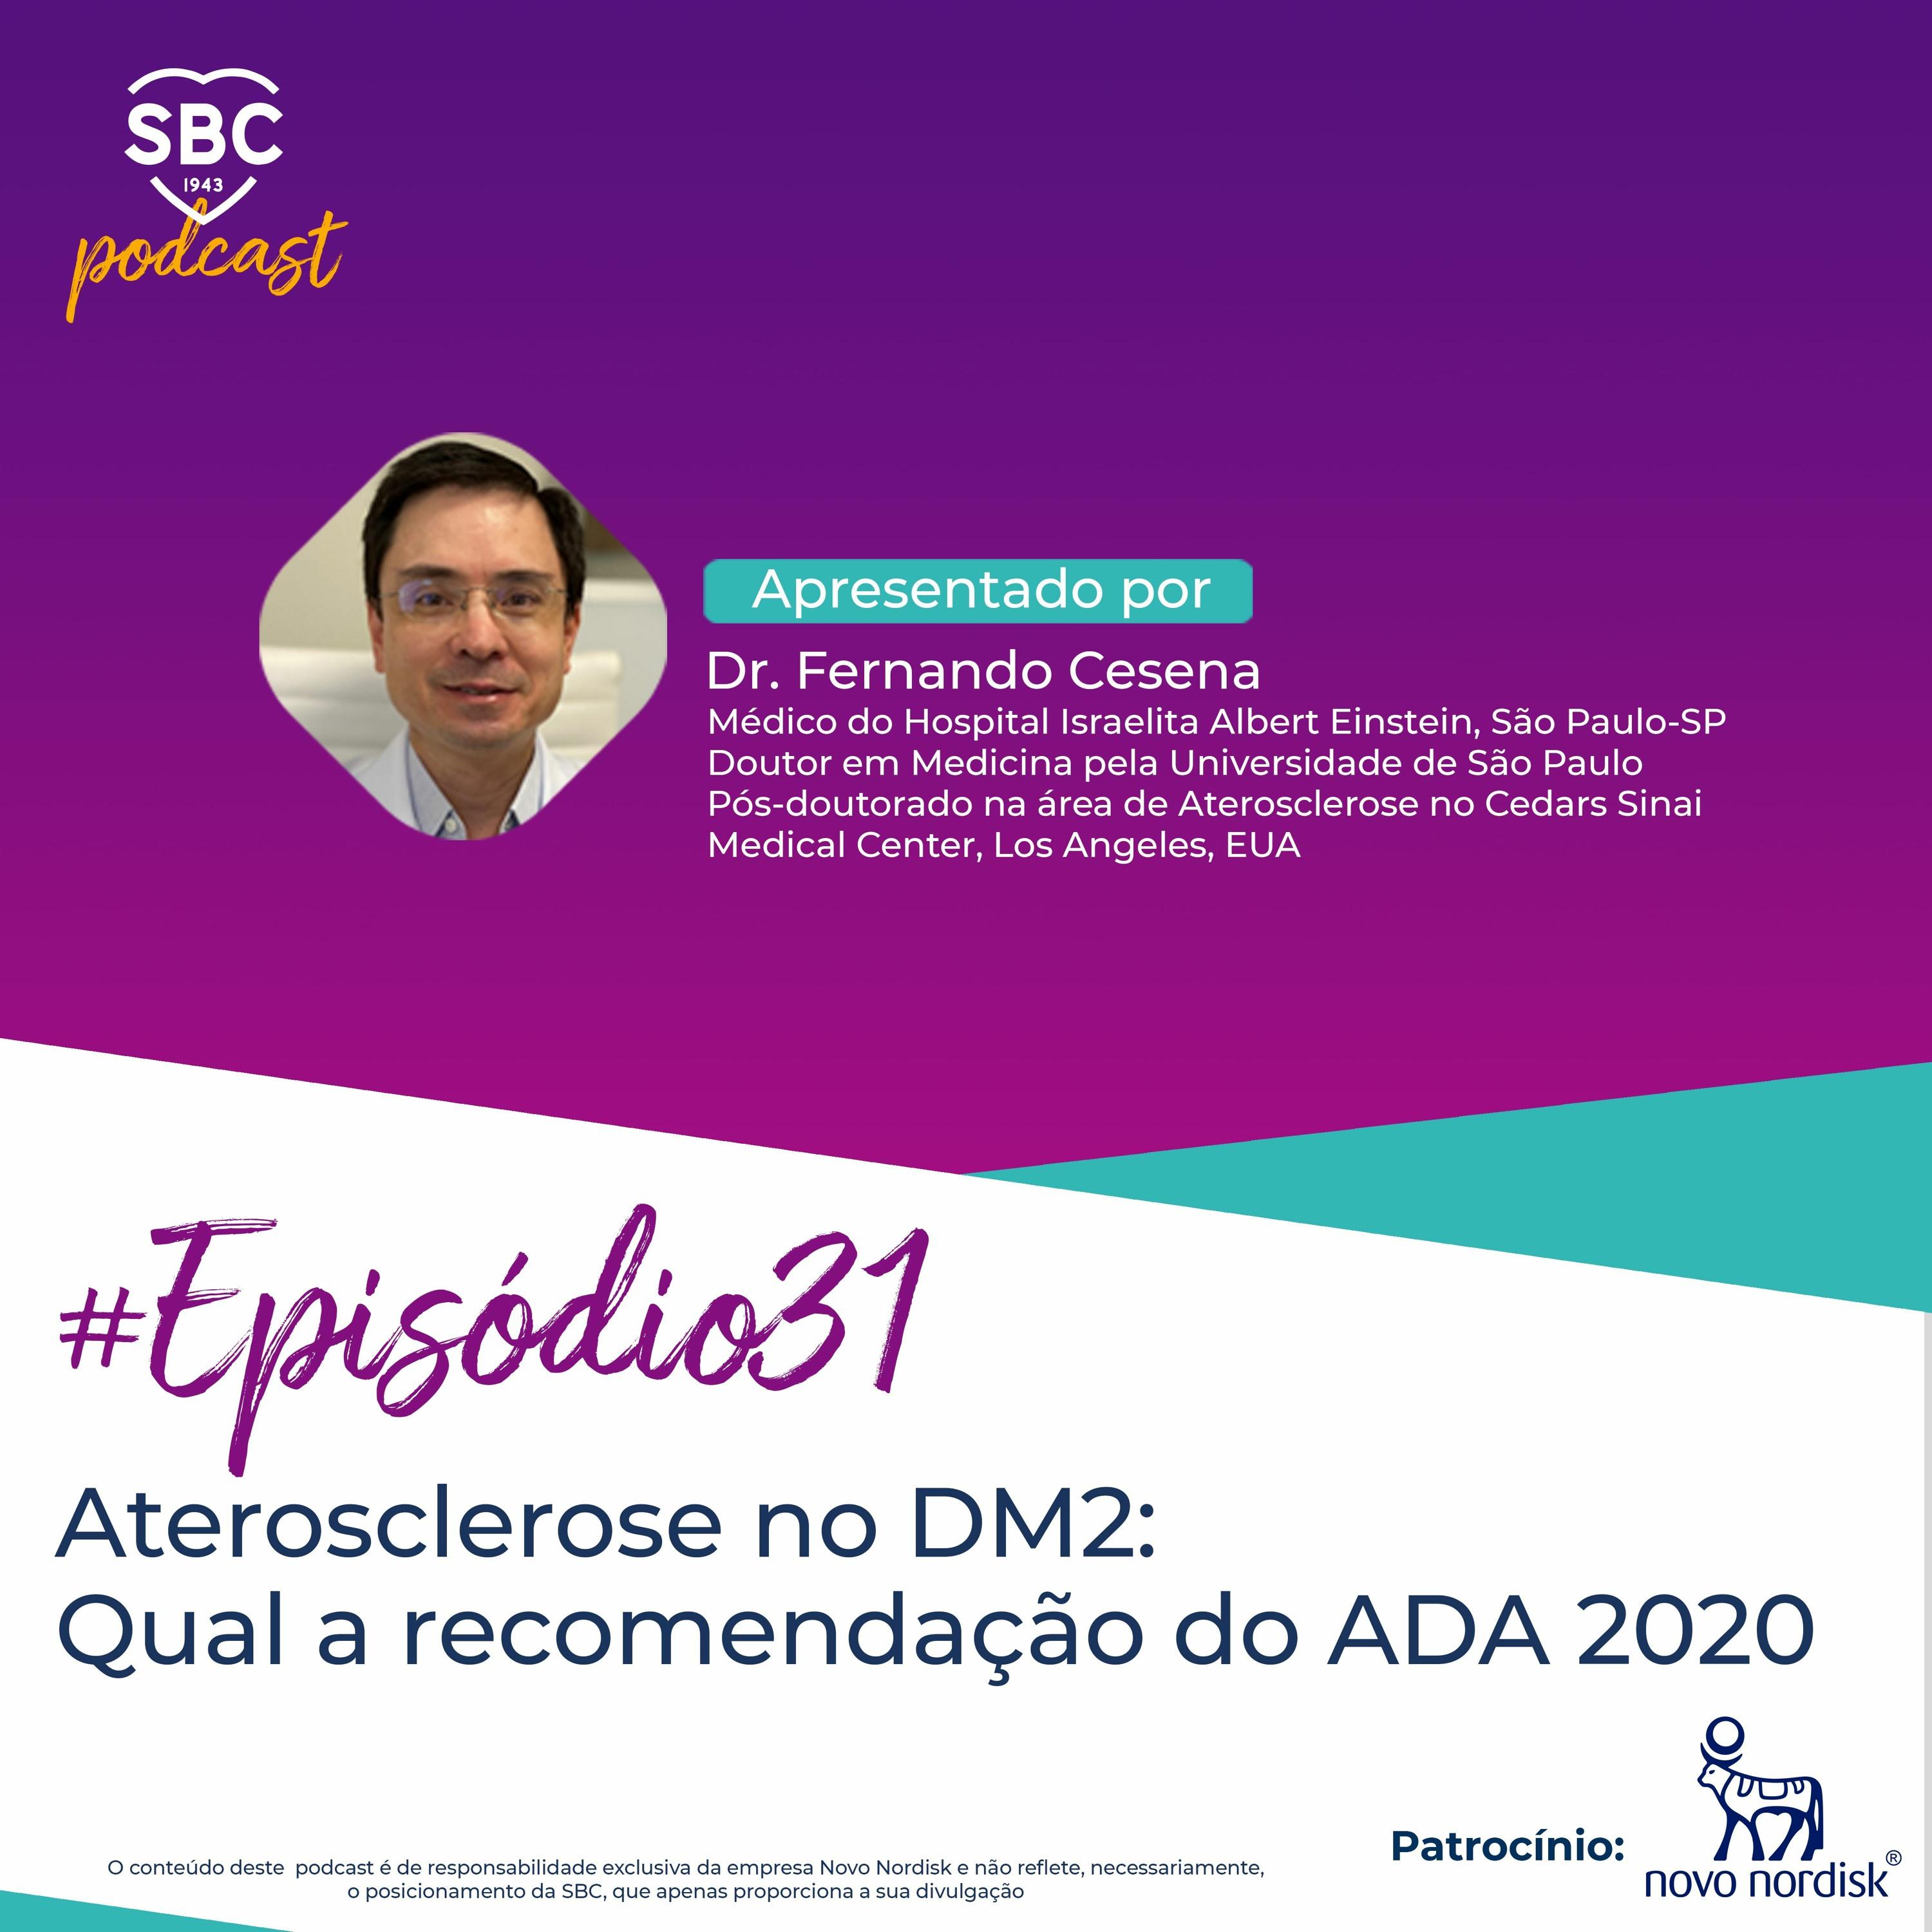 Neste episódio, o Dr. Fernando Cesena fala sobre aterosclerose e Diabetes Tipo 2 e as mais recentes recomendações dos consensos da American Diabetes Association (ADA) e European Association for the Study of Diabetes (EASD).